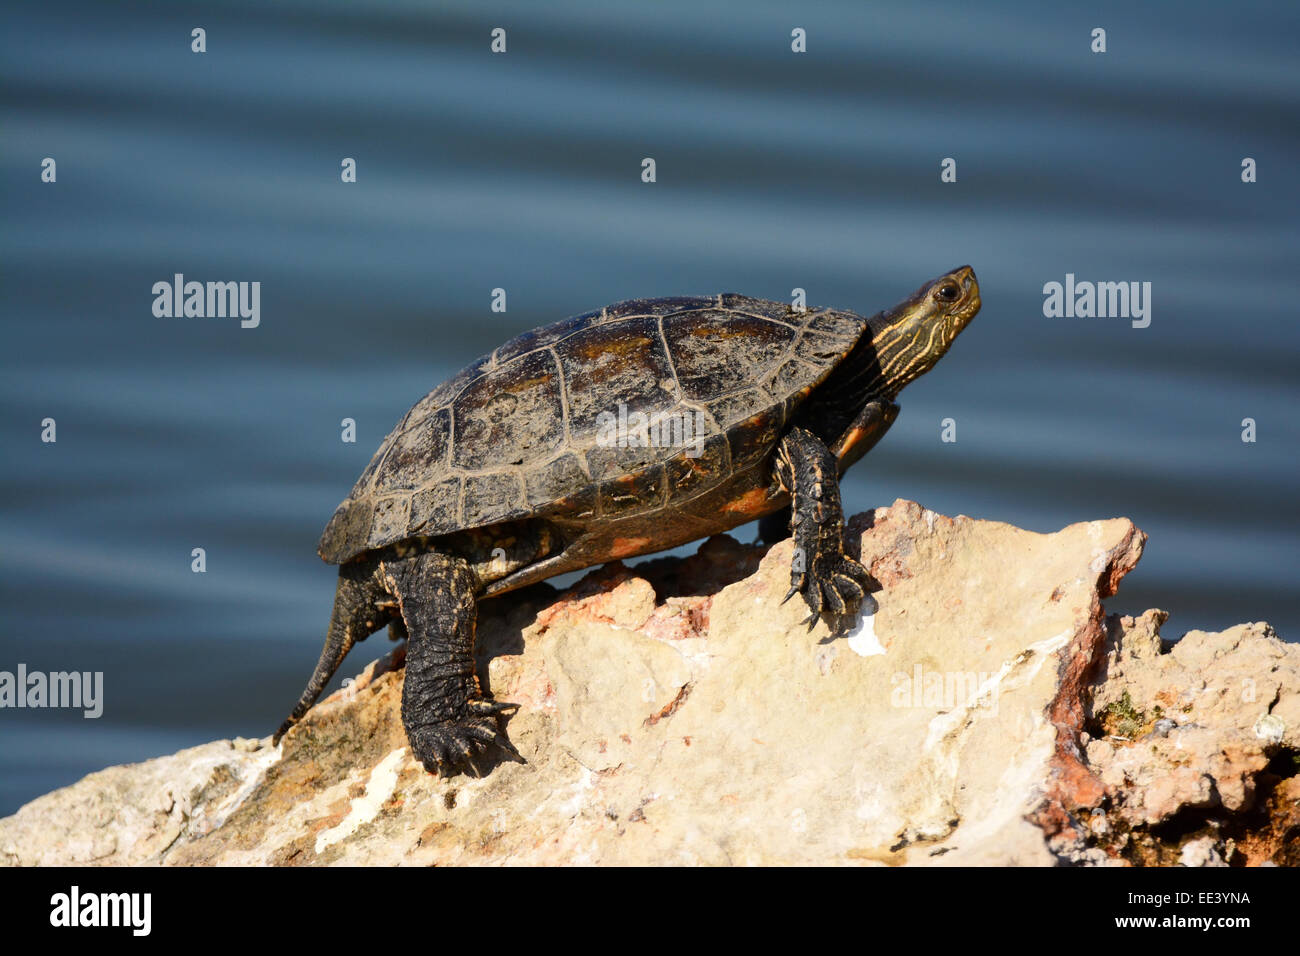 La tortuga de pantano disfrutando del sol Foto de stock